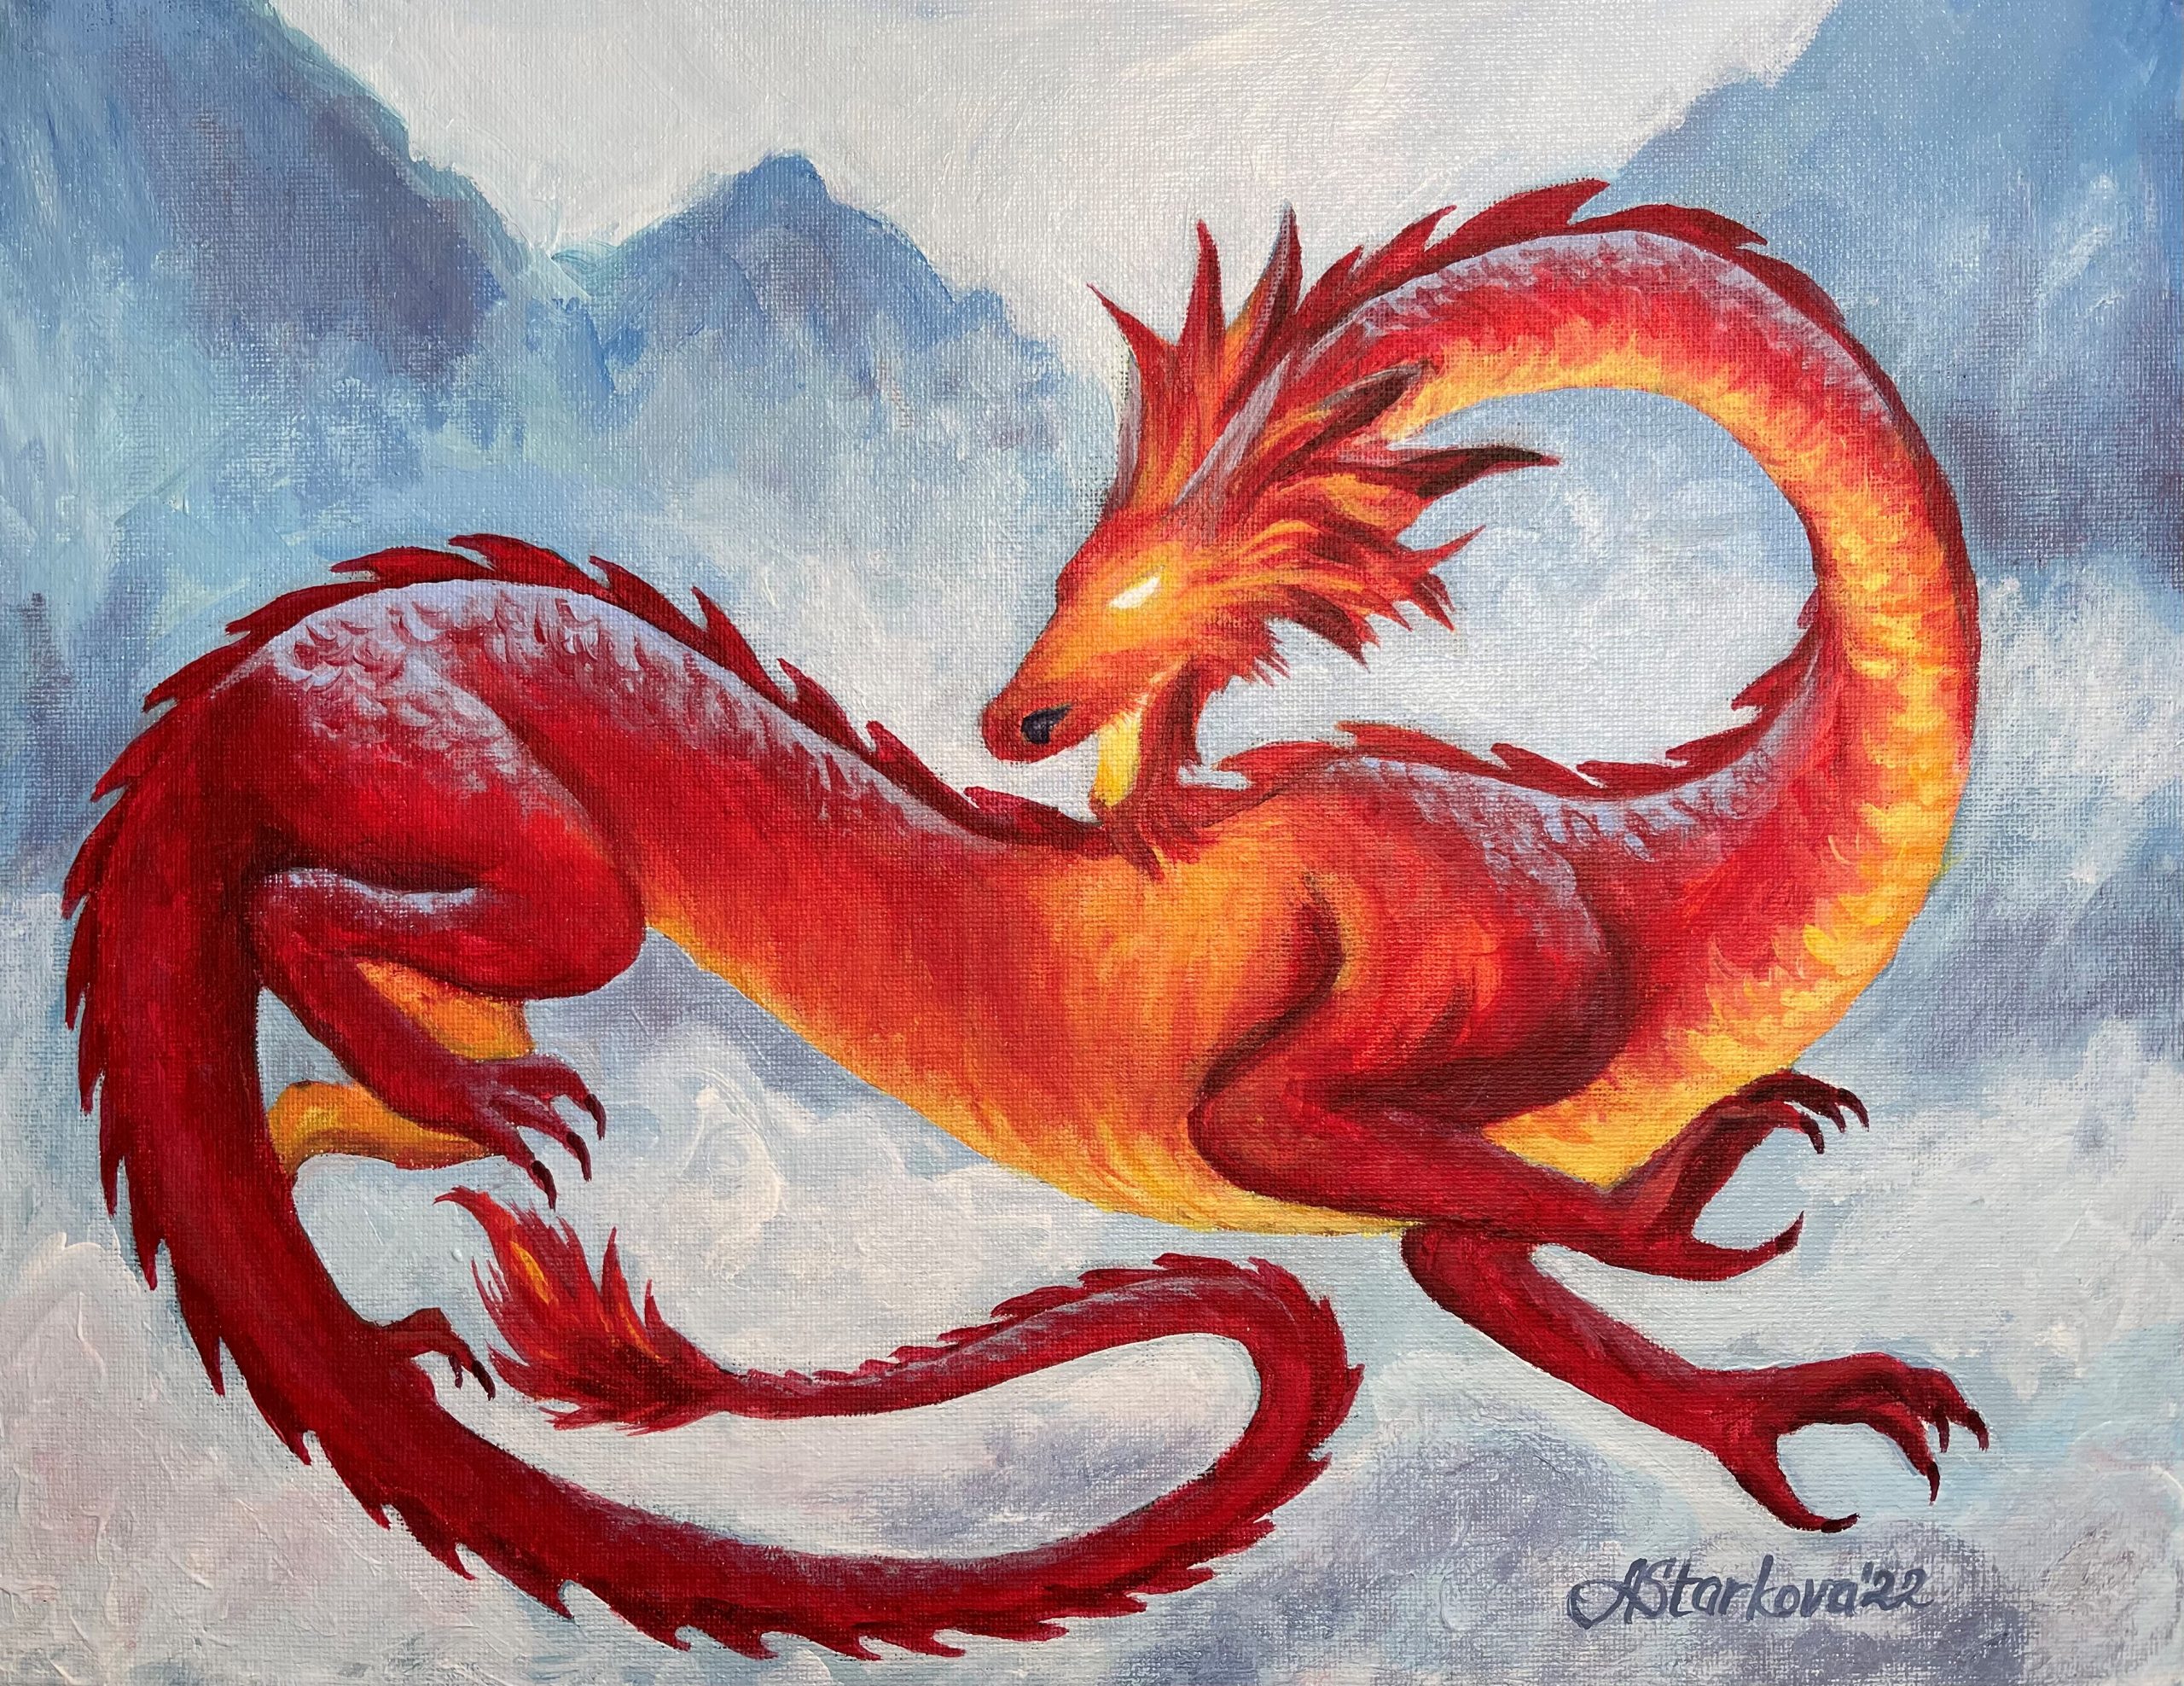 "Fire dragon"